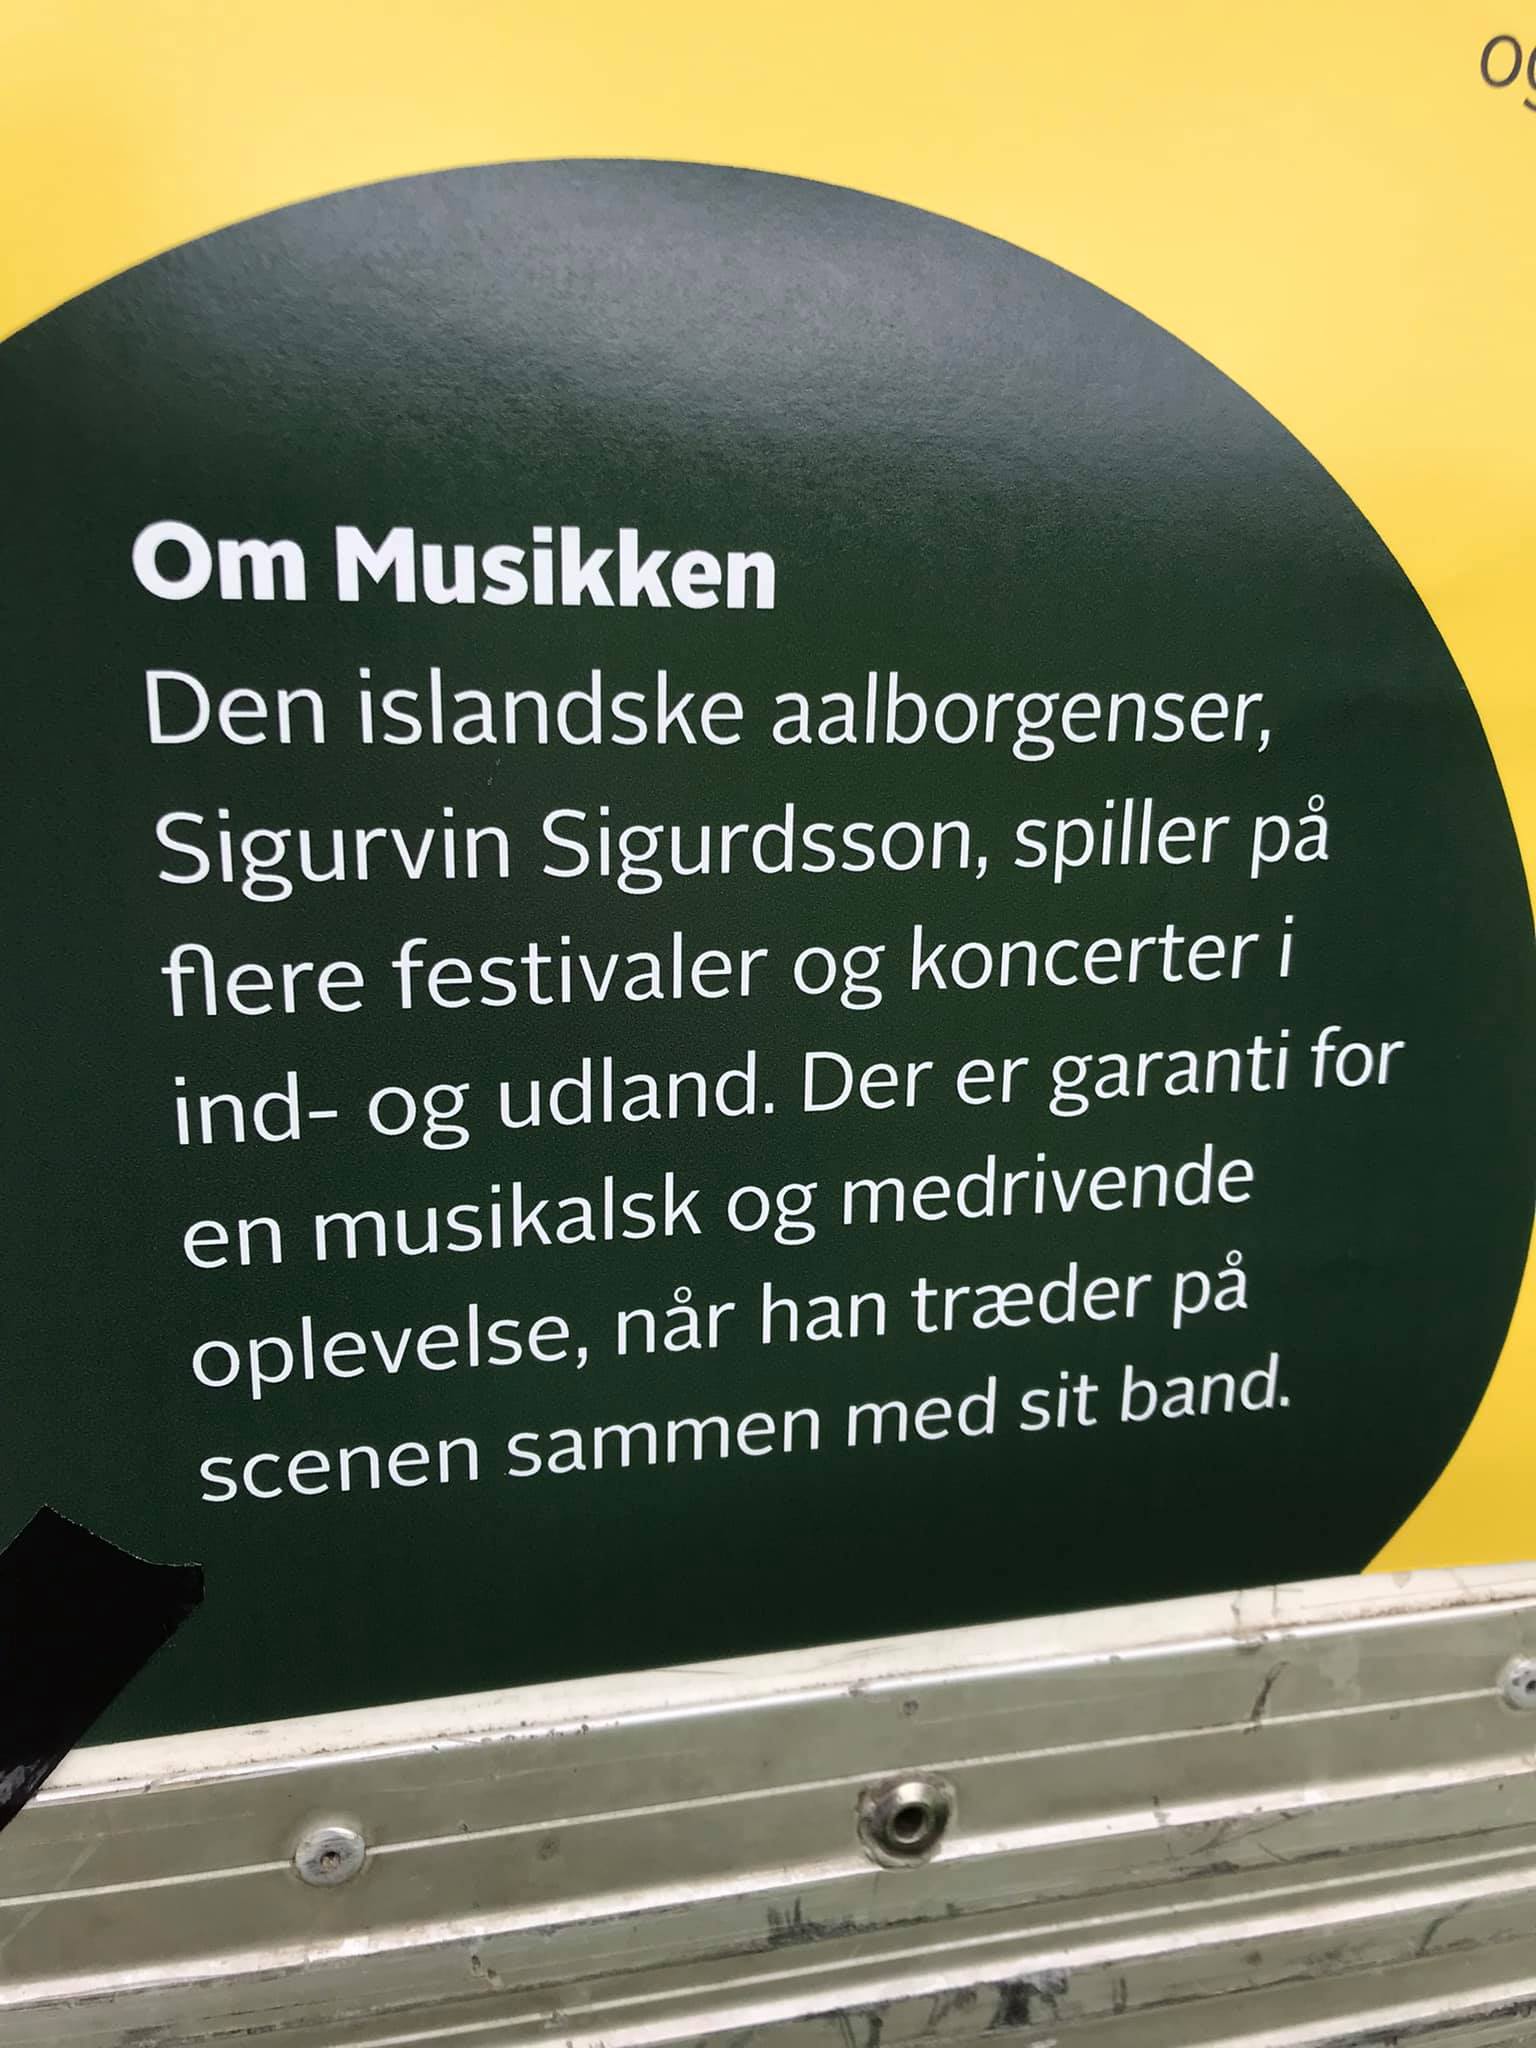 Sigurvin Sigurdsson